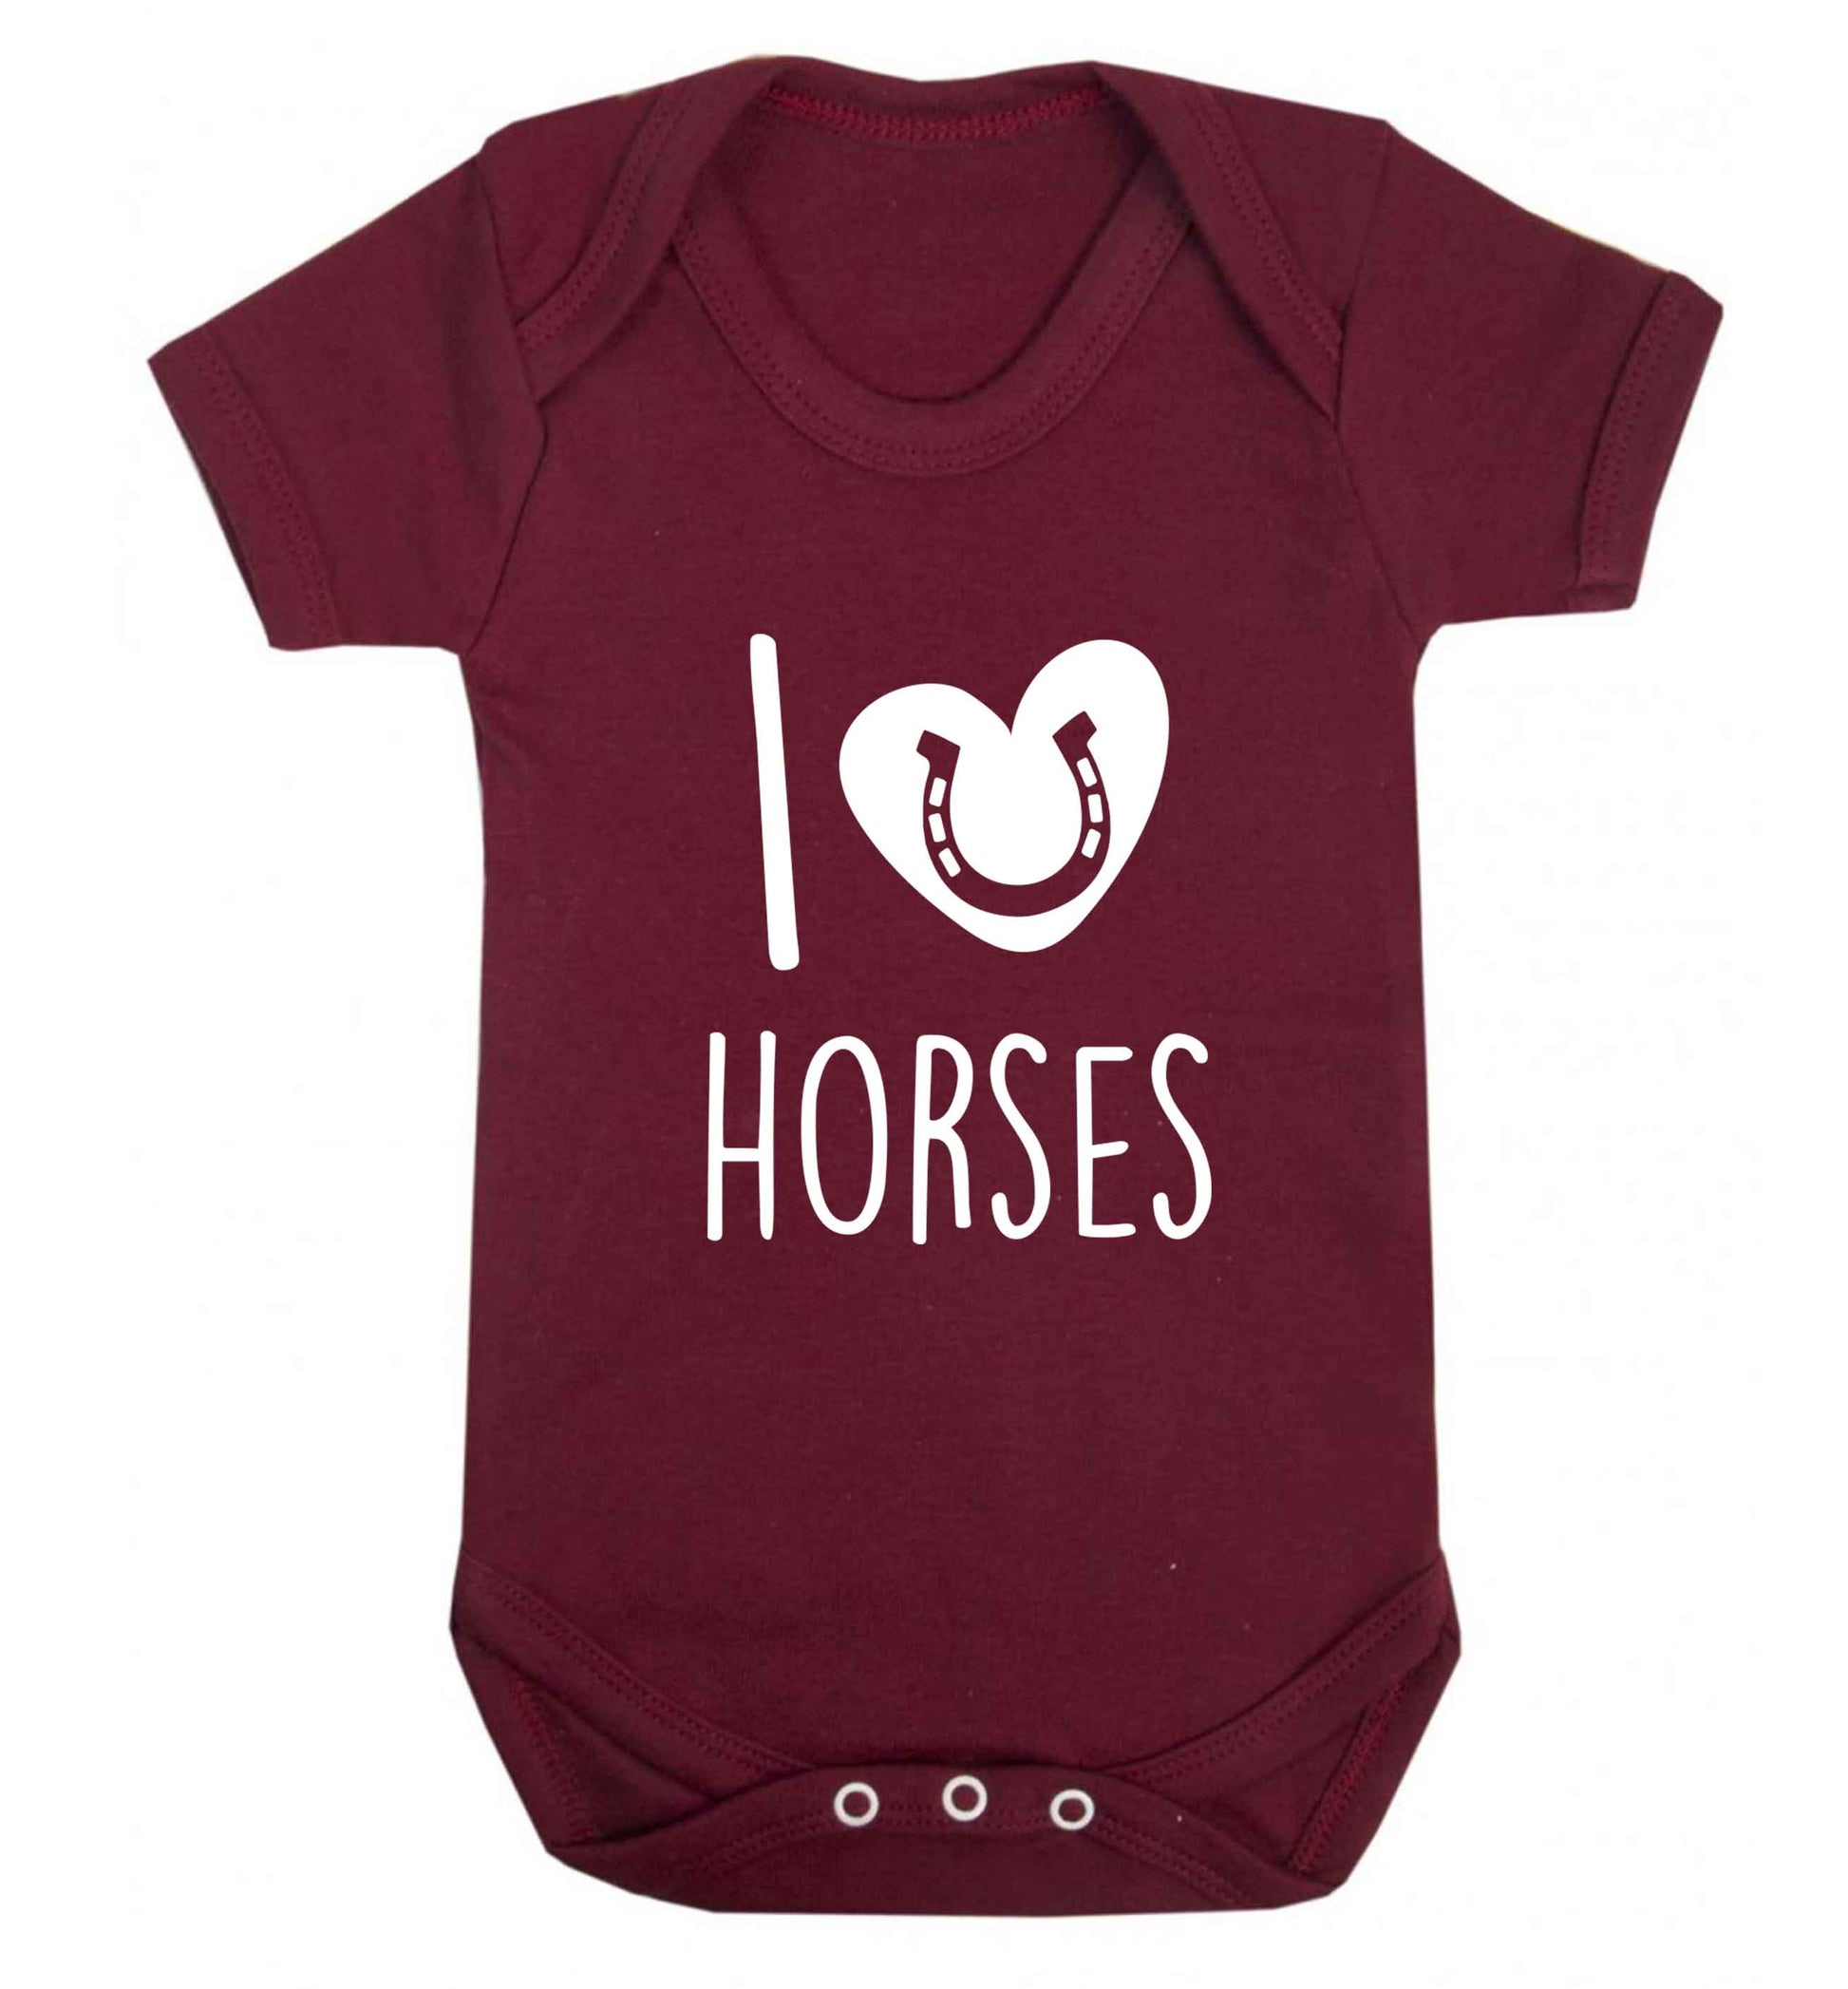 I love horses baby vest maroon 18-24 months